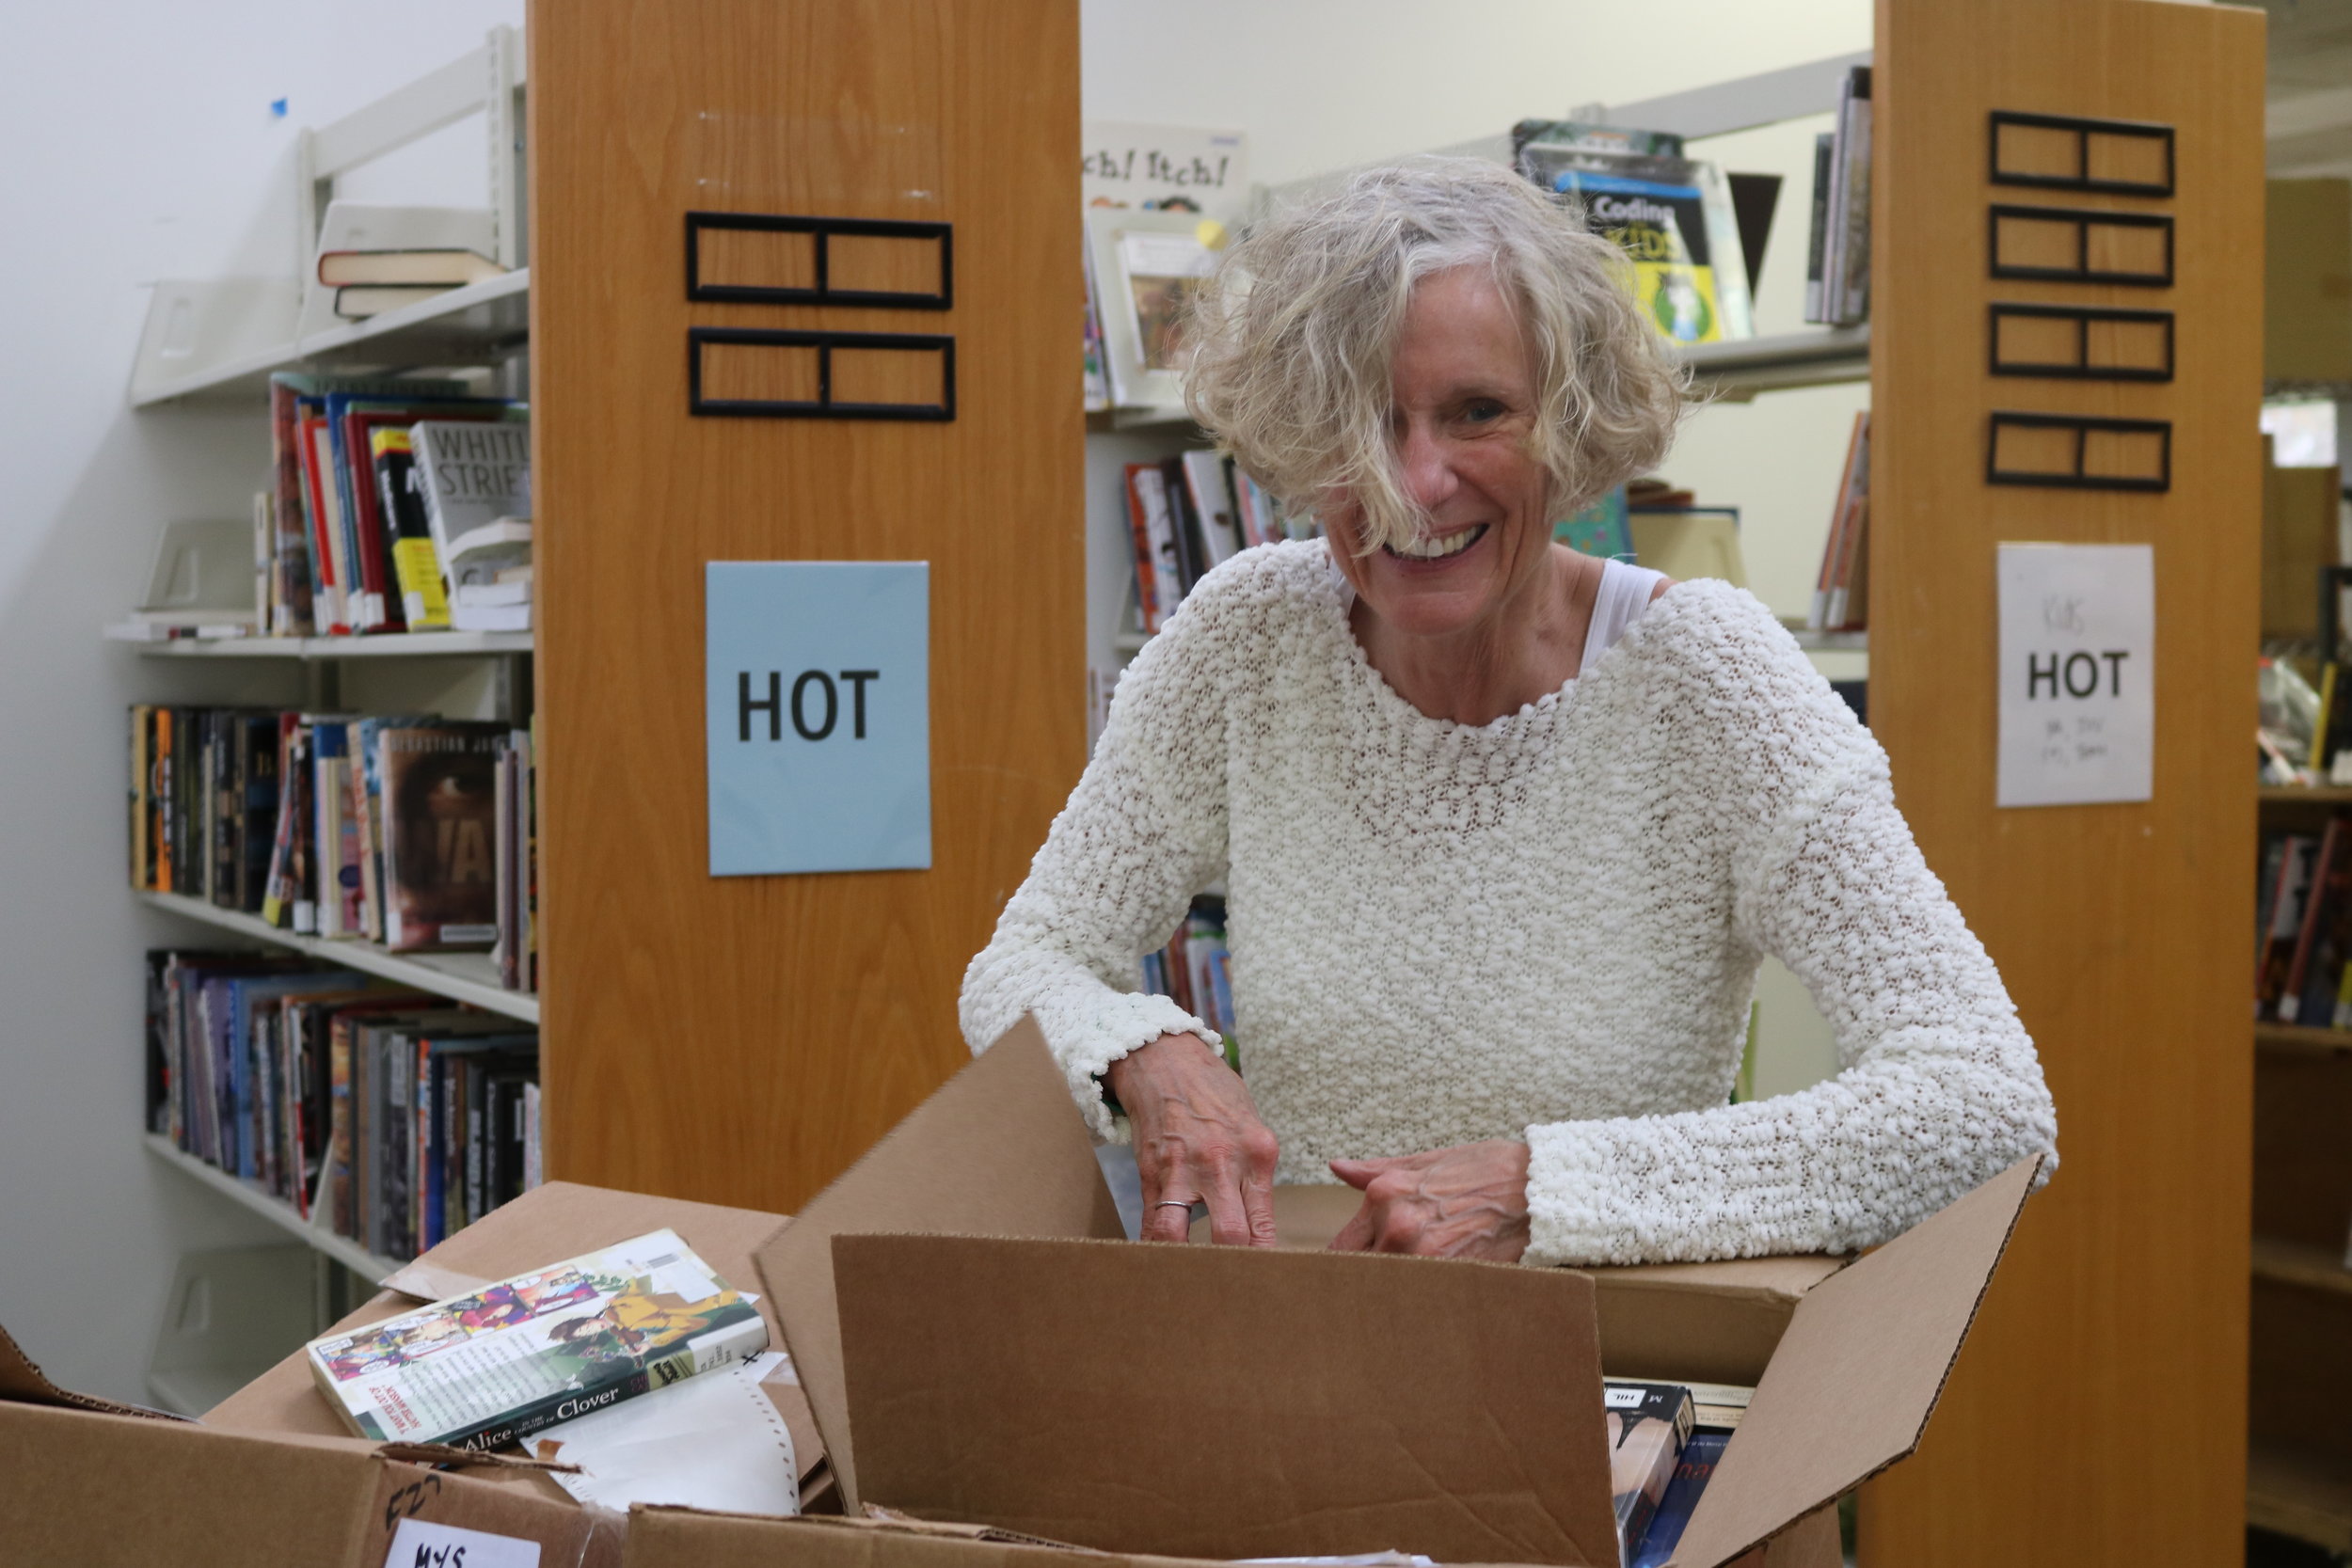 Houston Library Foundation Volunteer sorting books